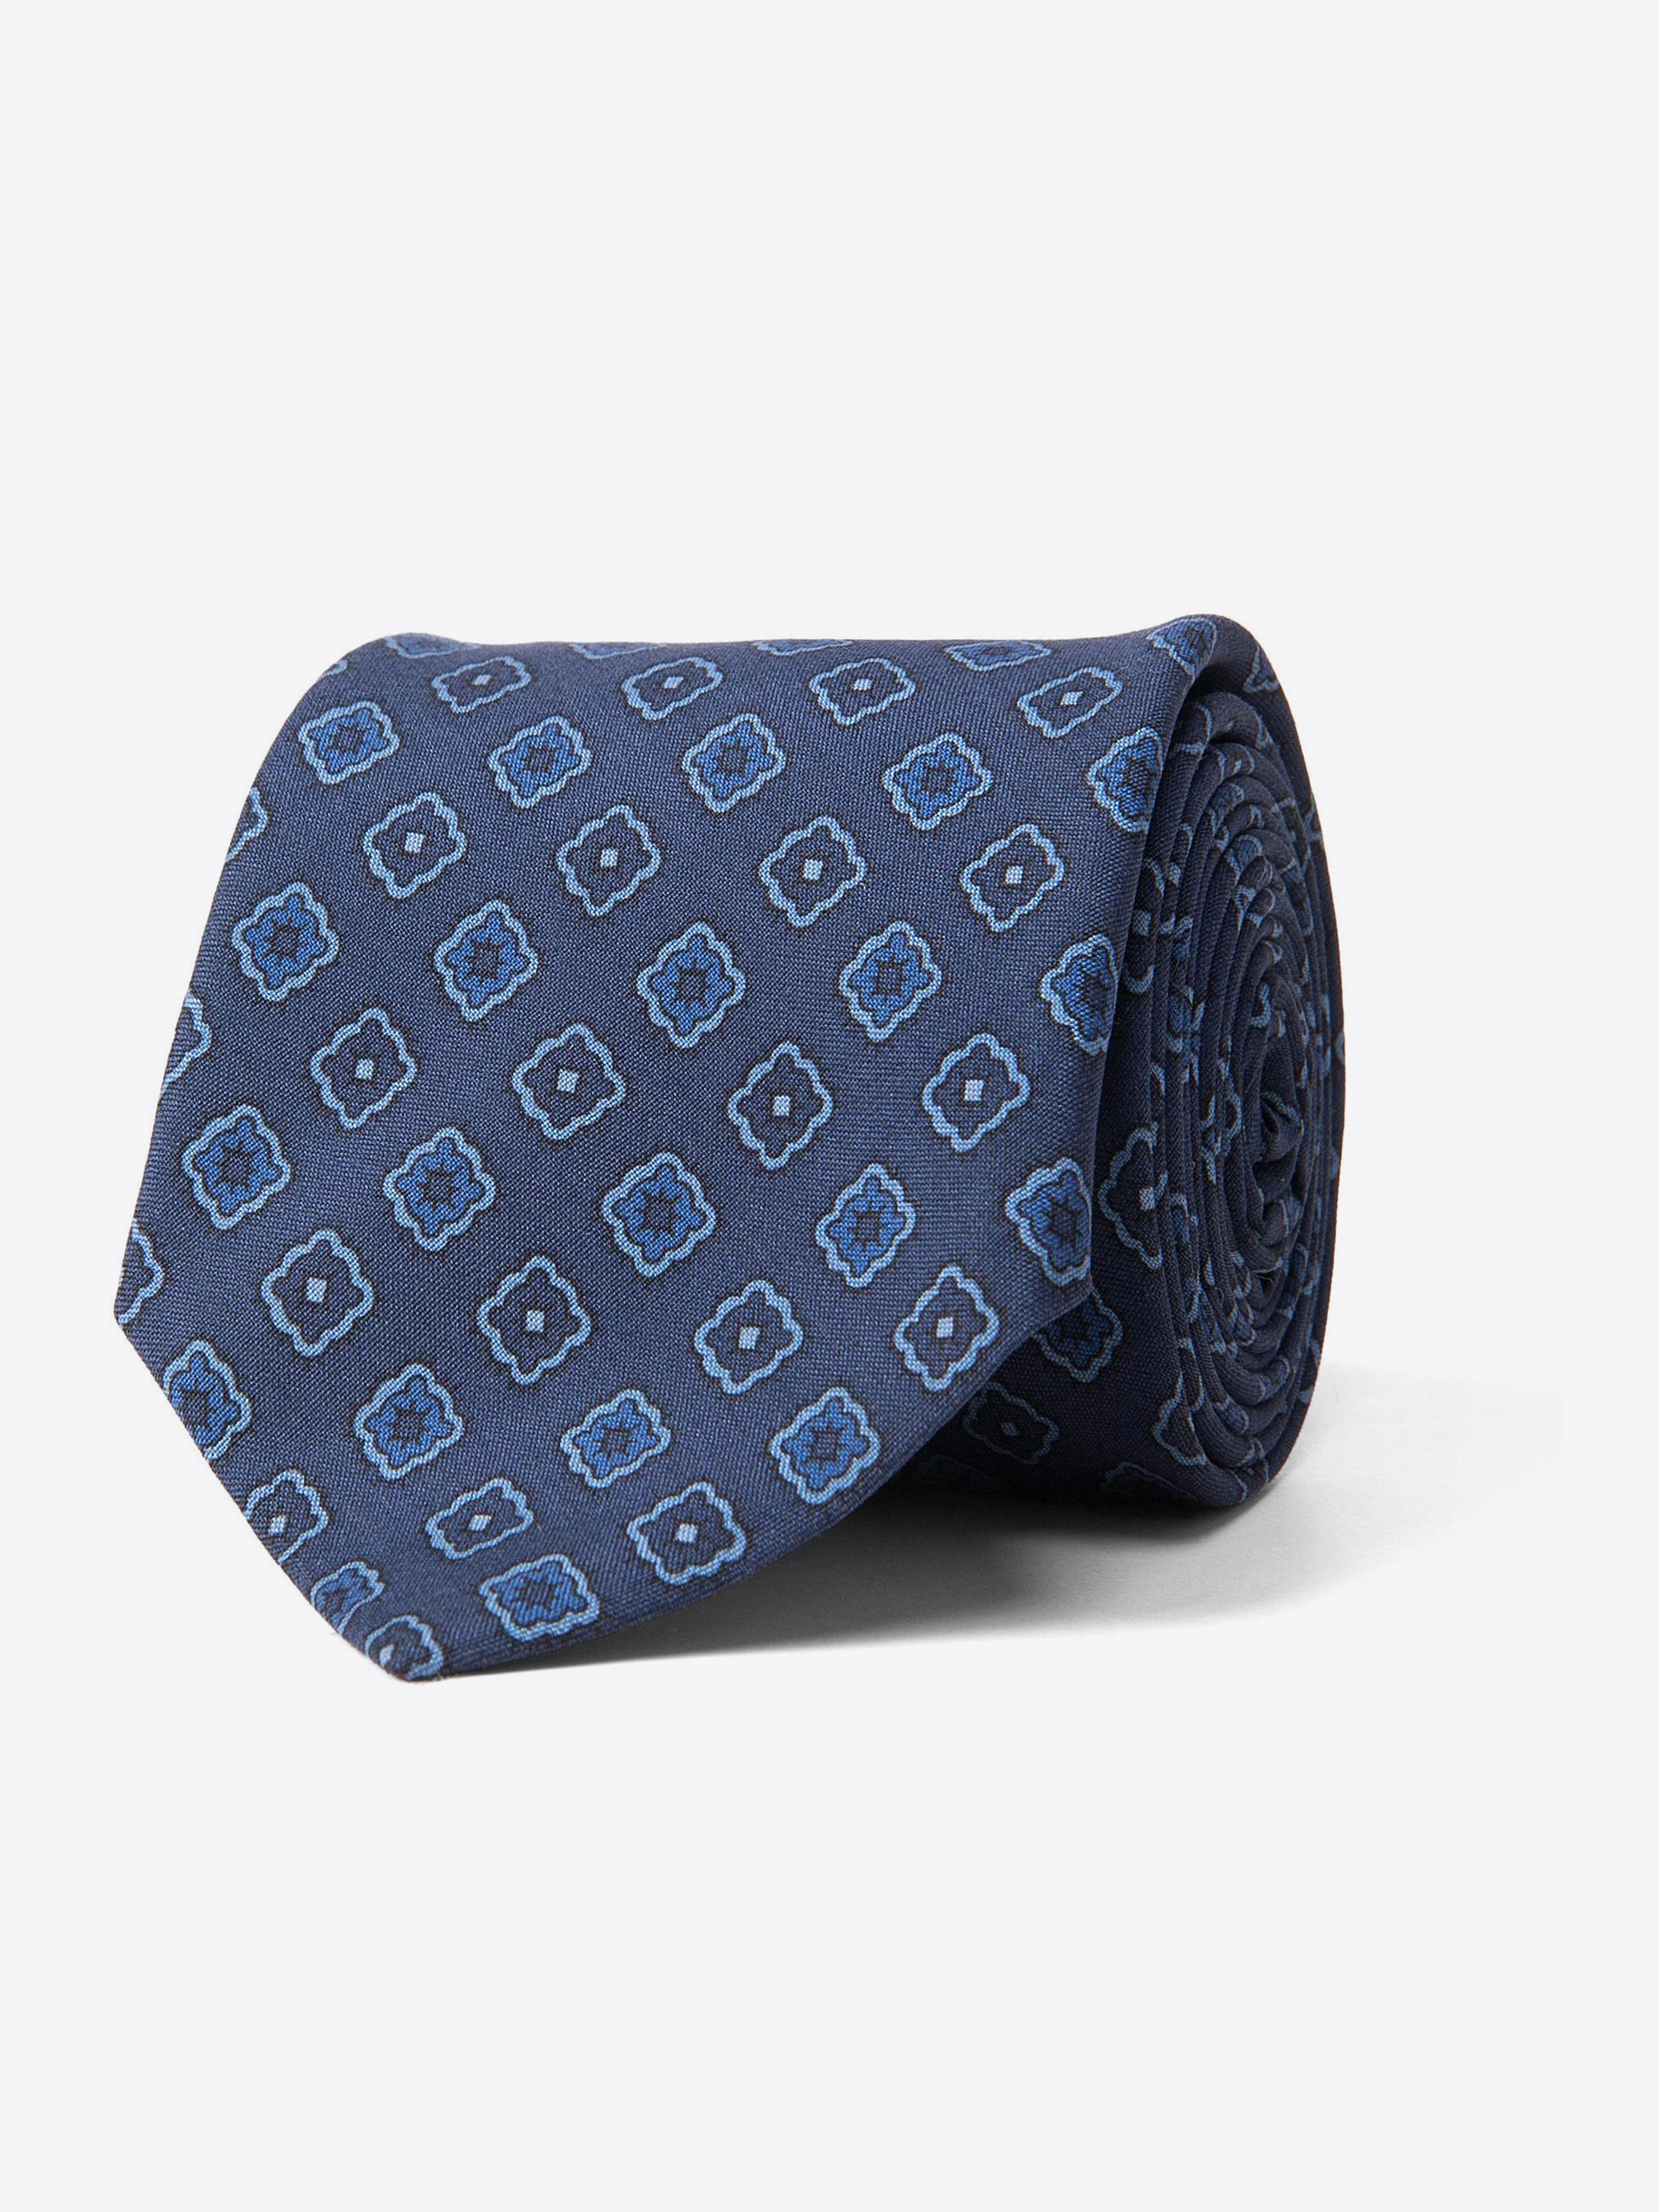 Zoom Image of Slate Blue Foulard Print Silk Tie